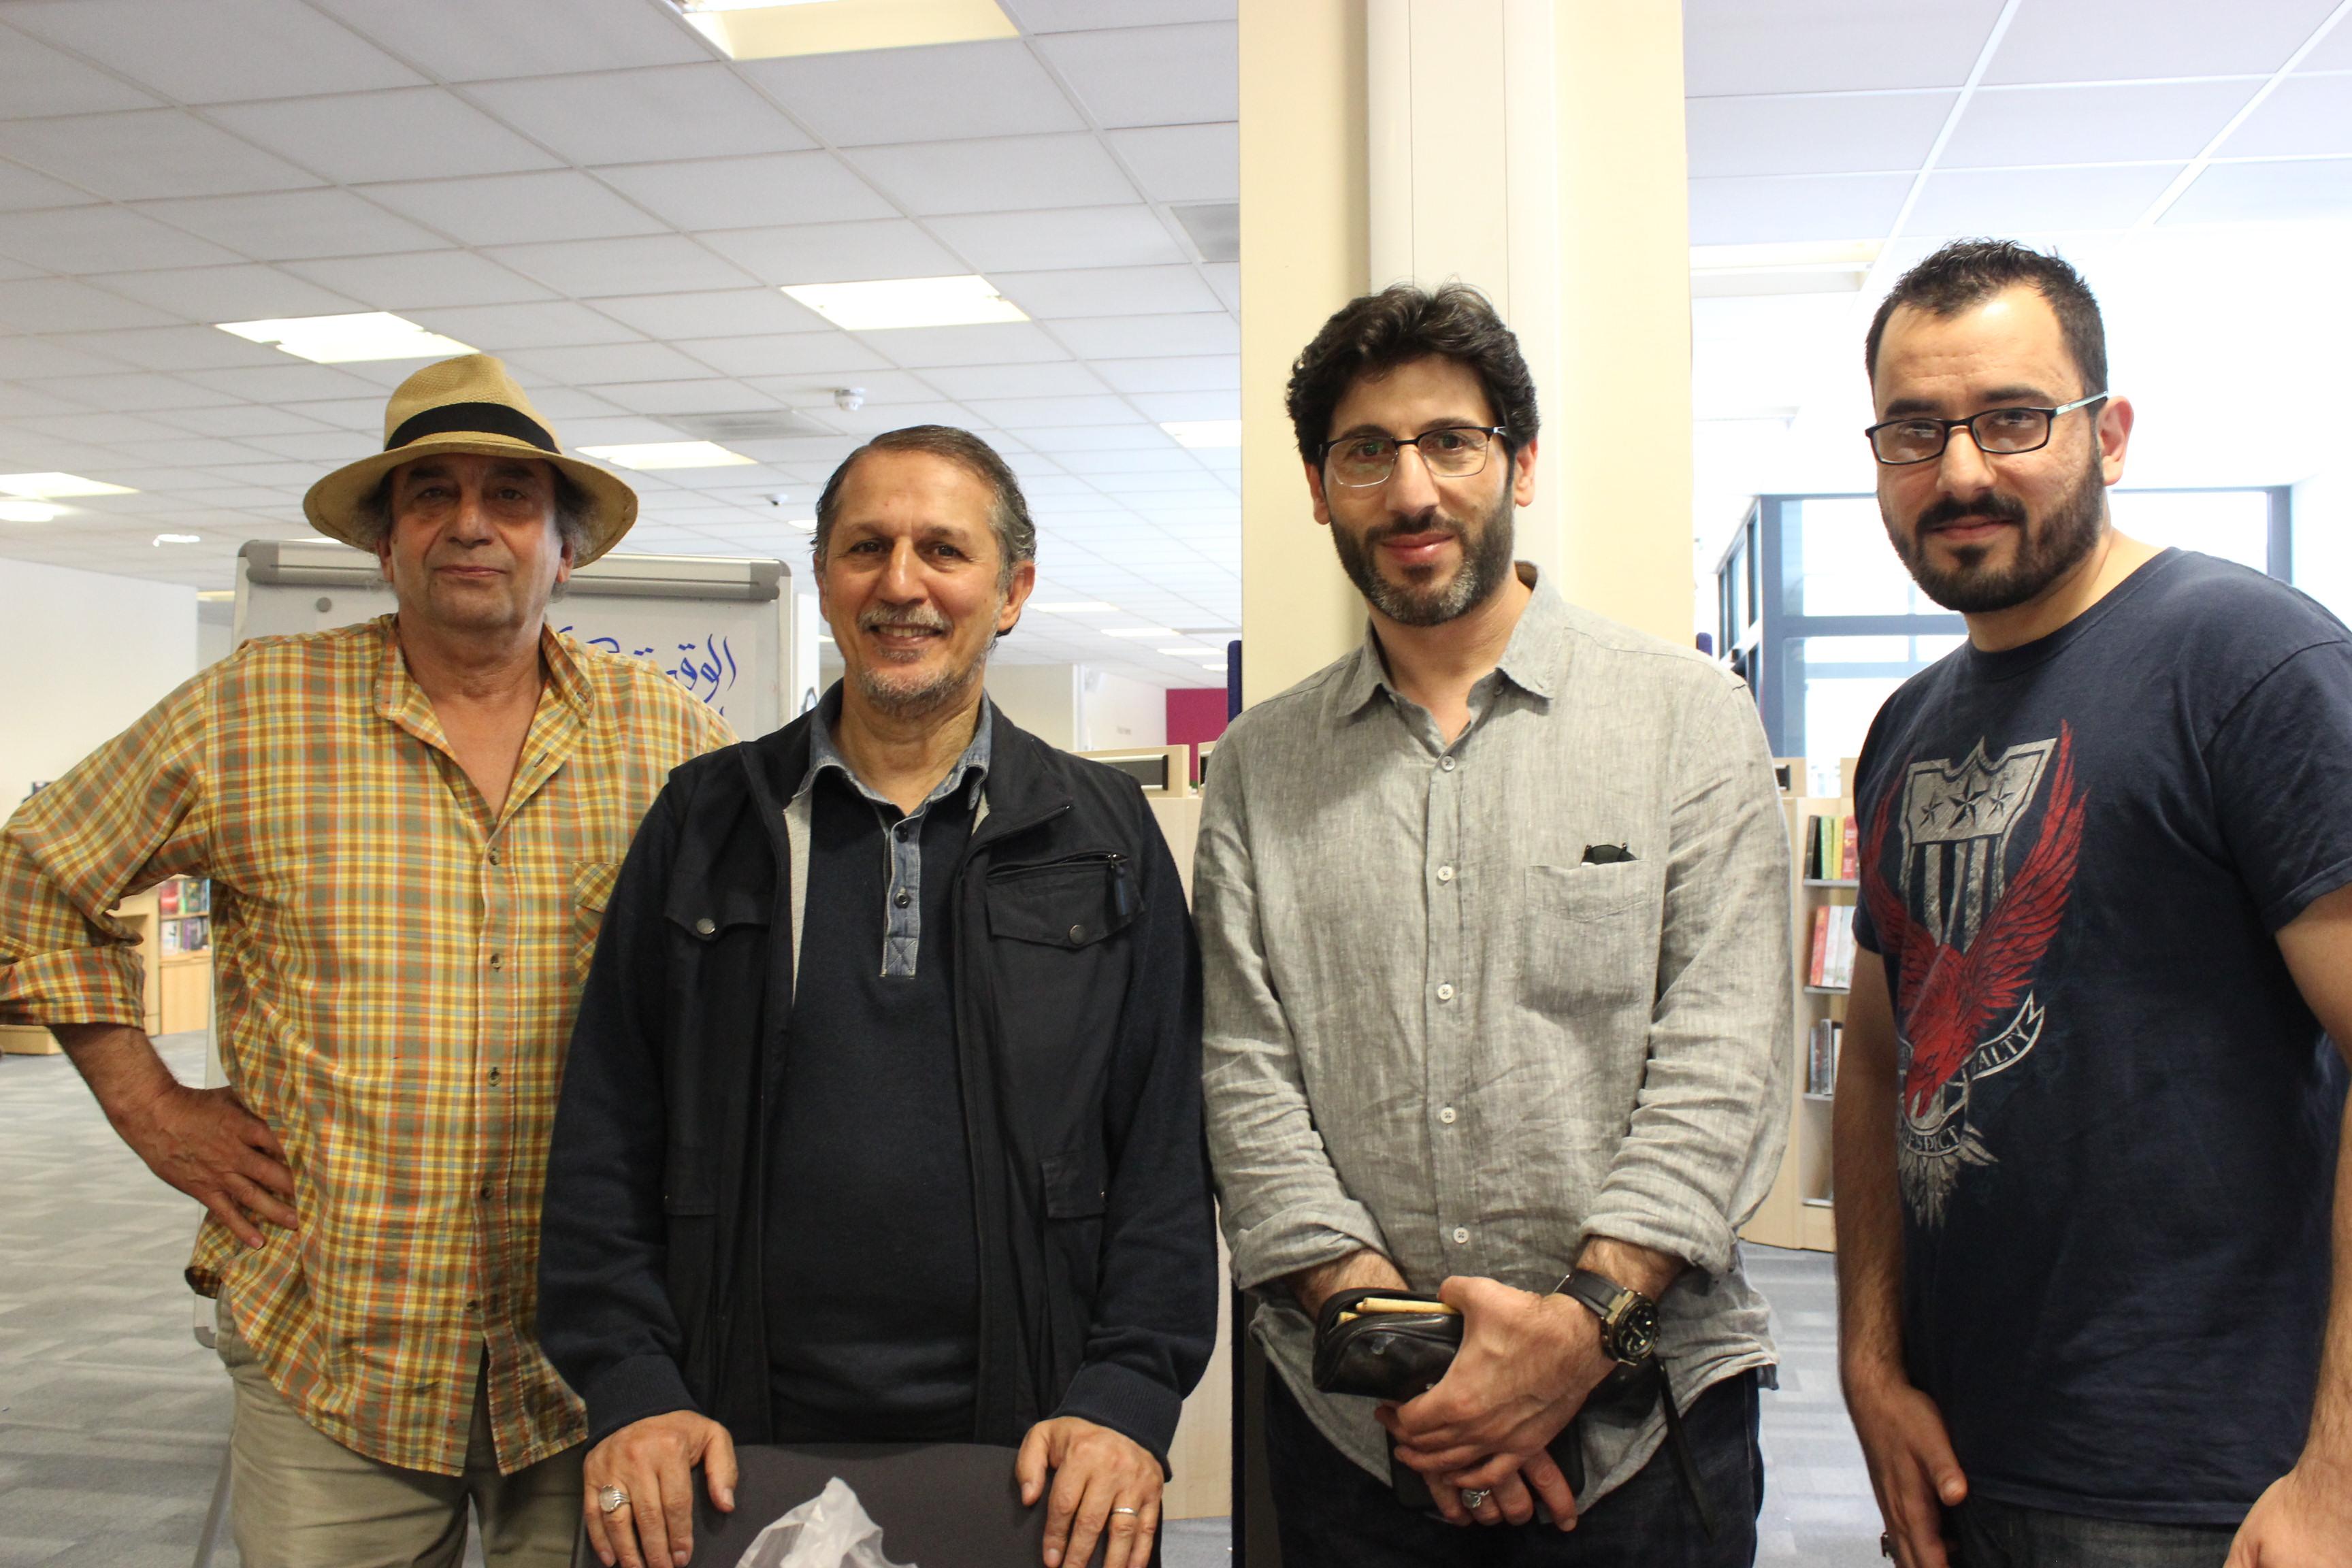 Yousif, Hassan, visiting artist Abdulazez Alamer & guests.